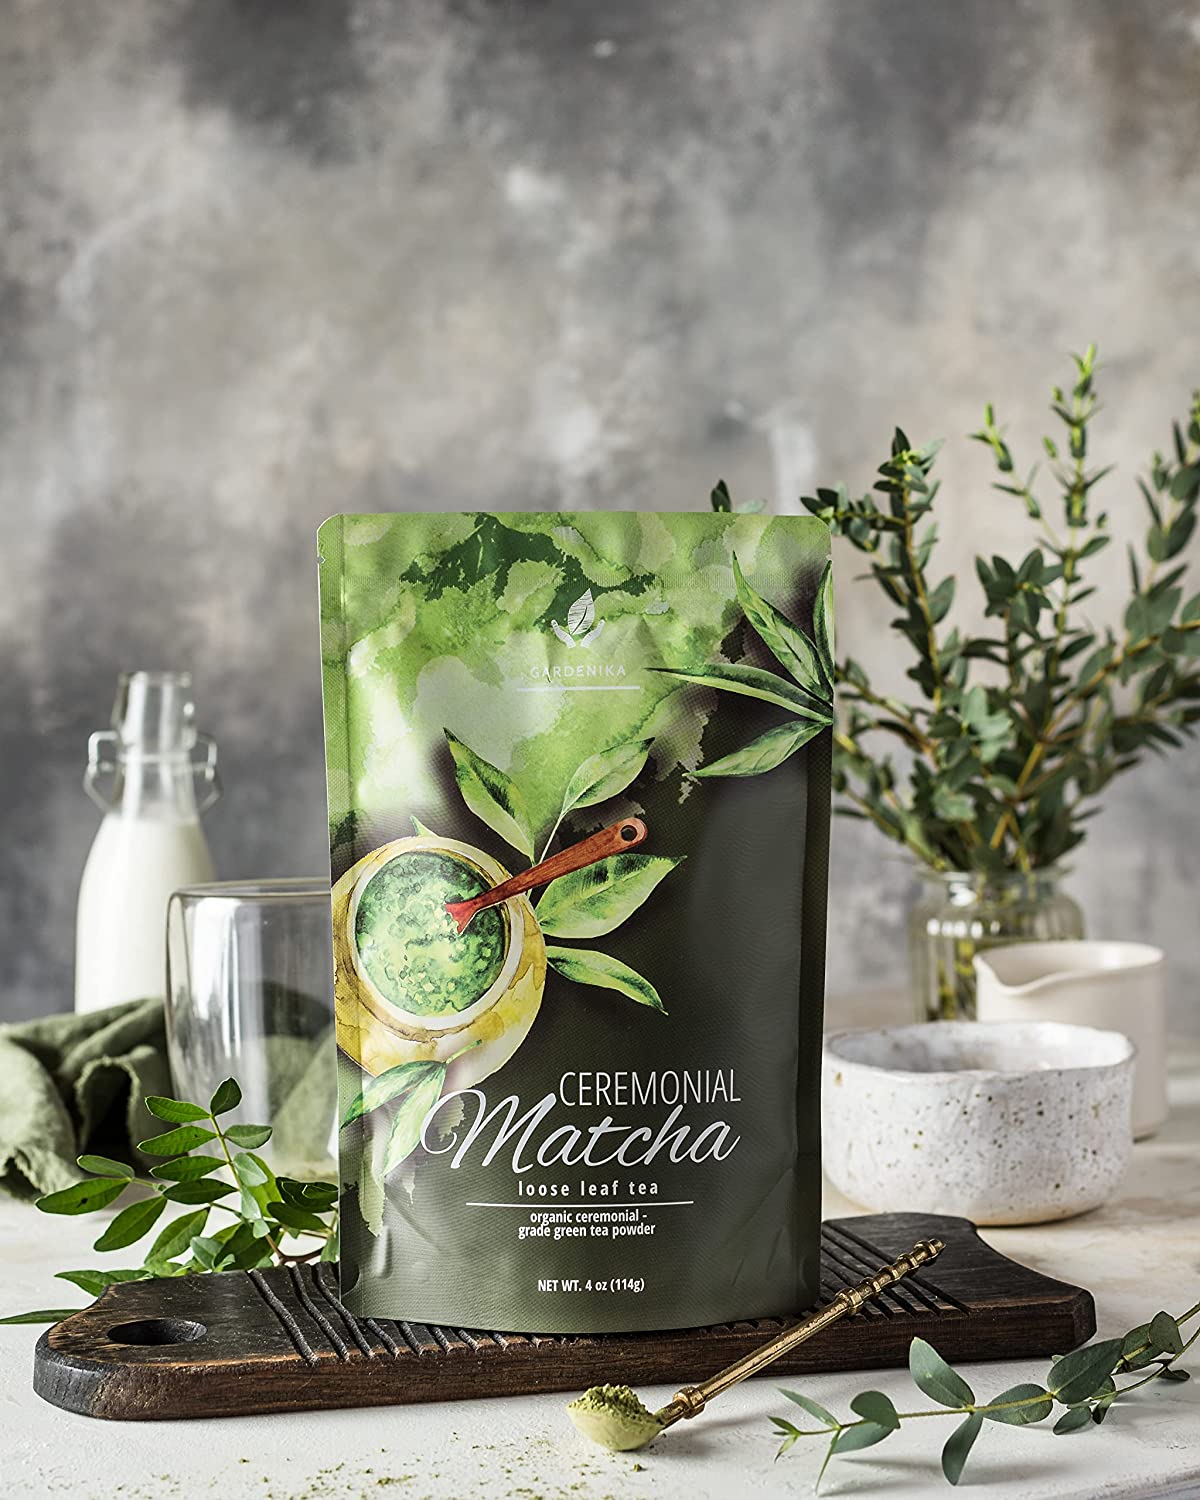 Ceremonial Grade Matcha Green Tea Powder, USDA Organic, Kosher, Imported from Japan – 4 Oz (113g)